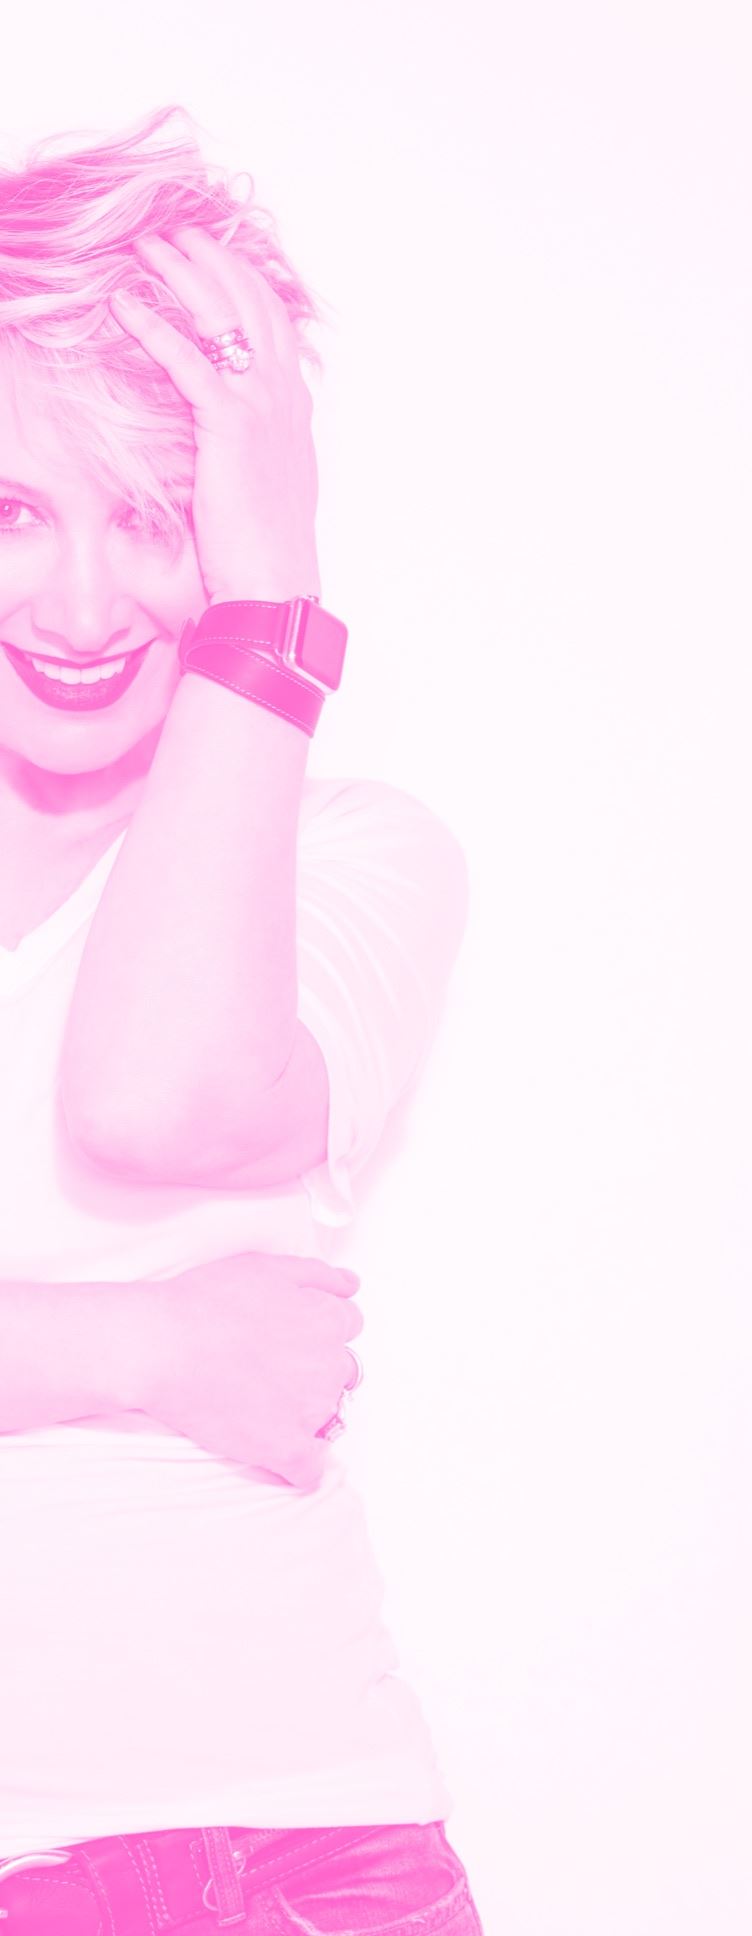 mobile pink image of Daphne smiling